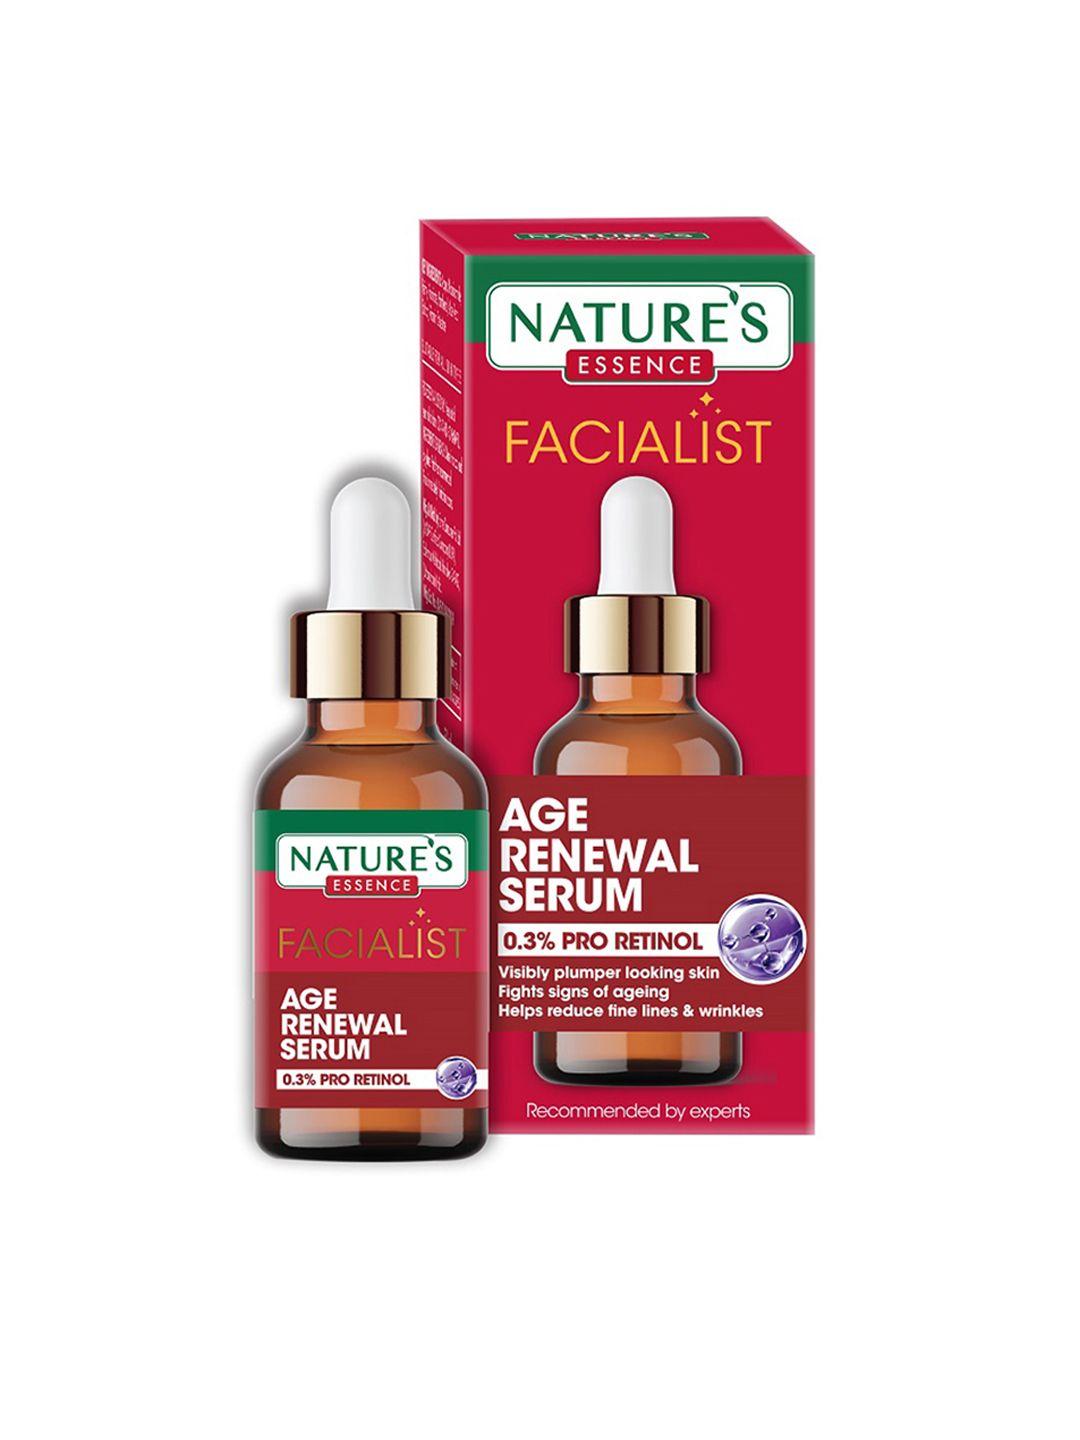 natures essence facialist age renewal serum with 0.3% pro-retinol - 30ml